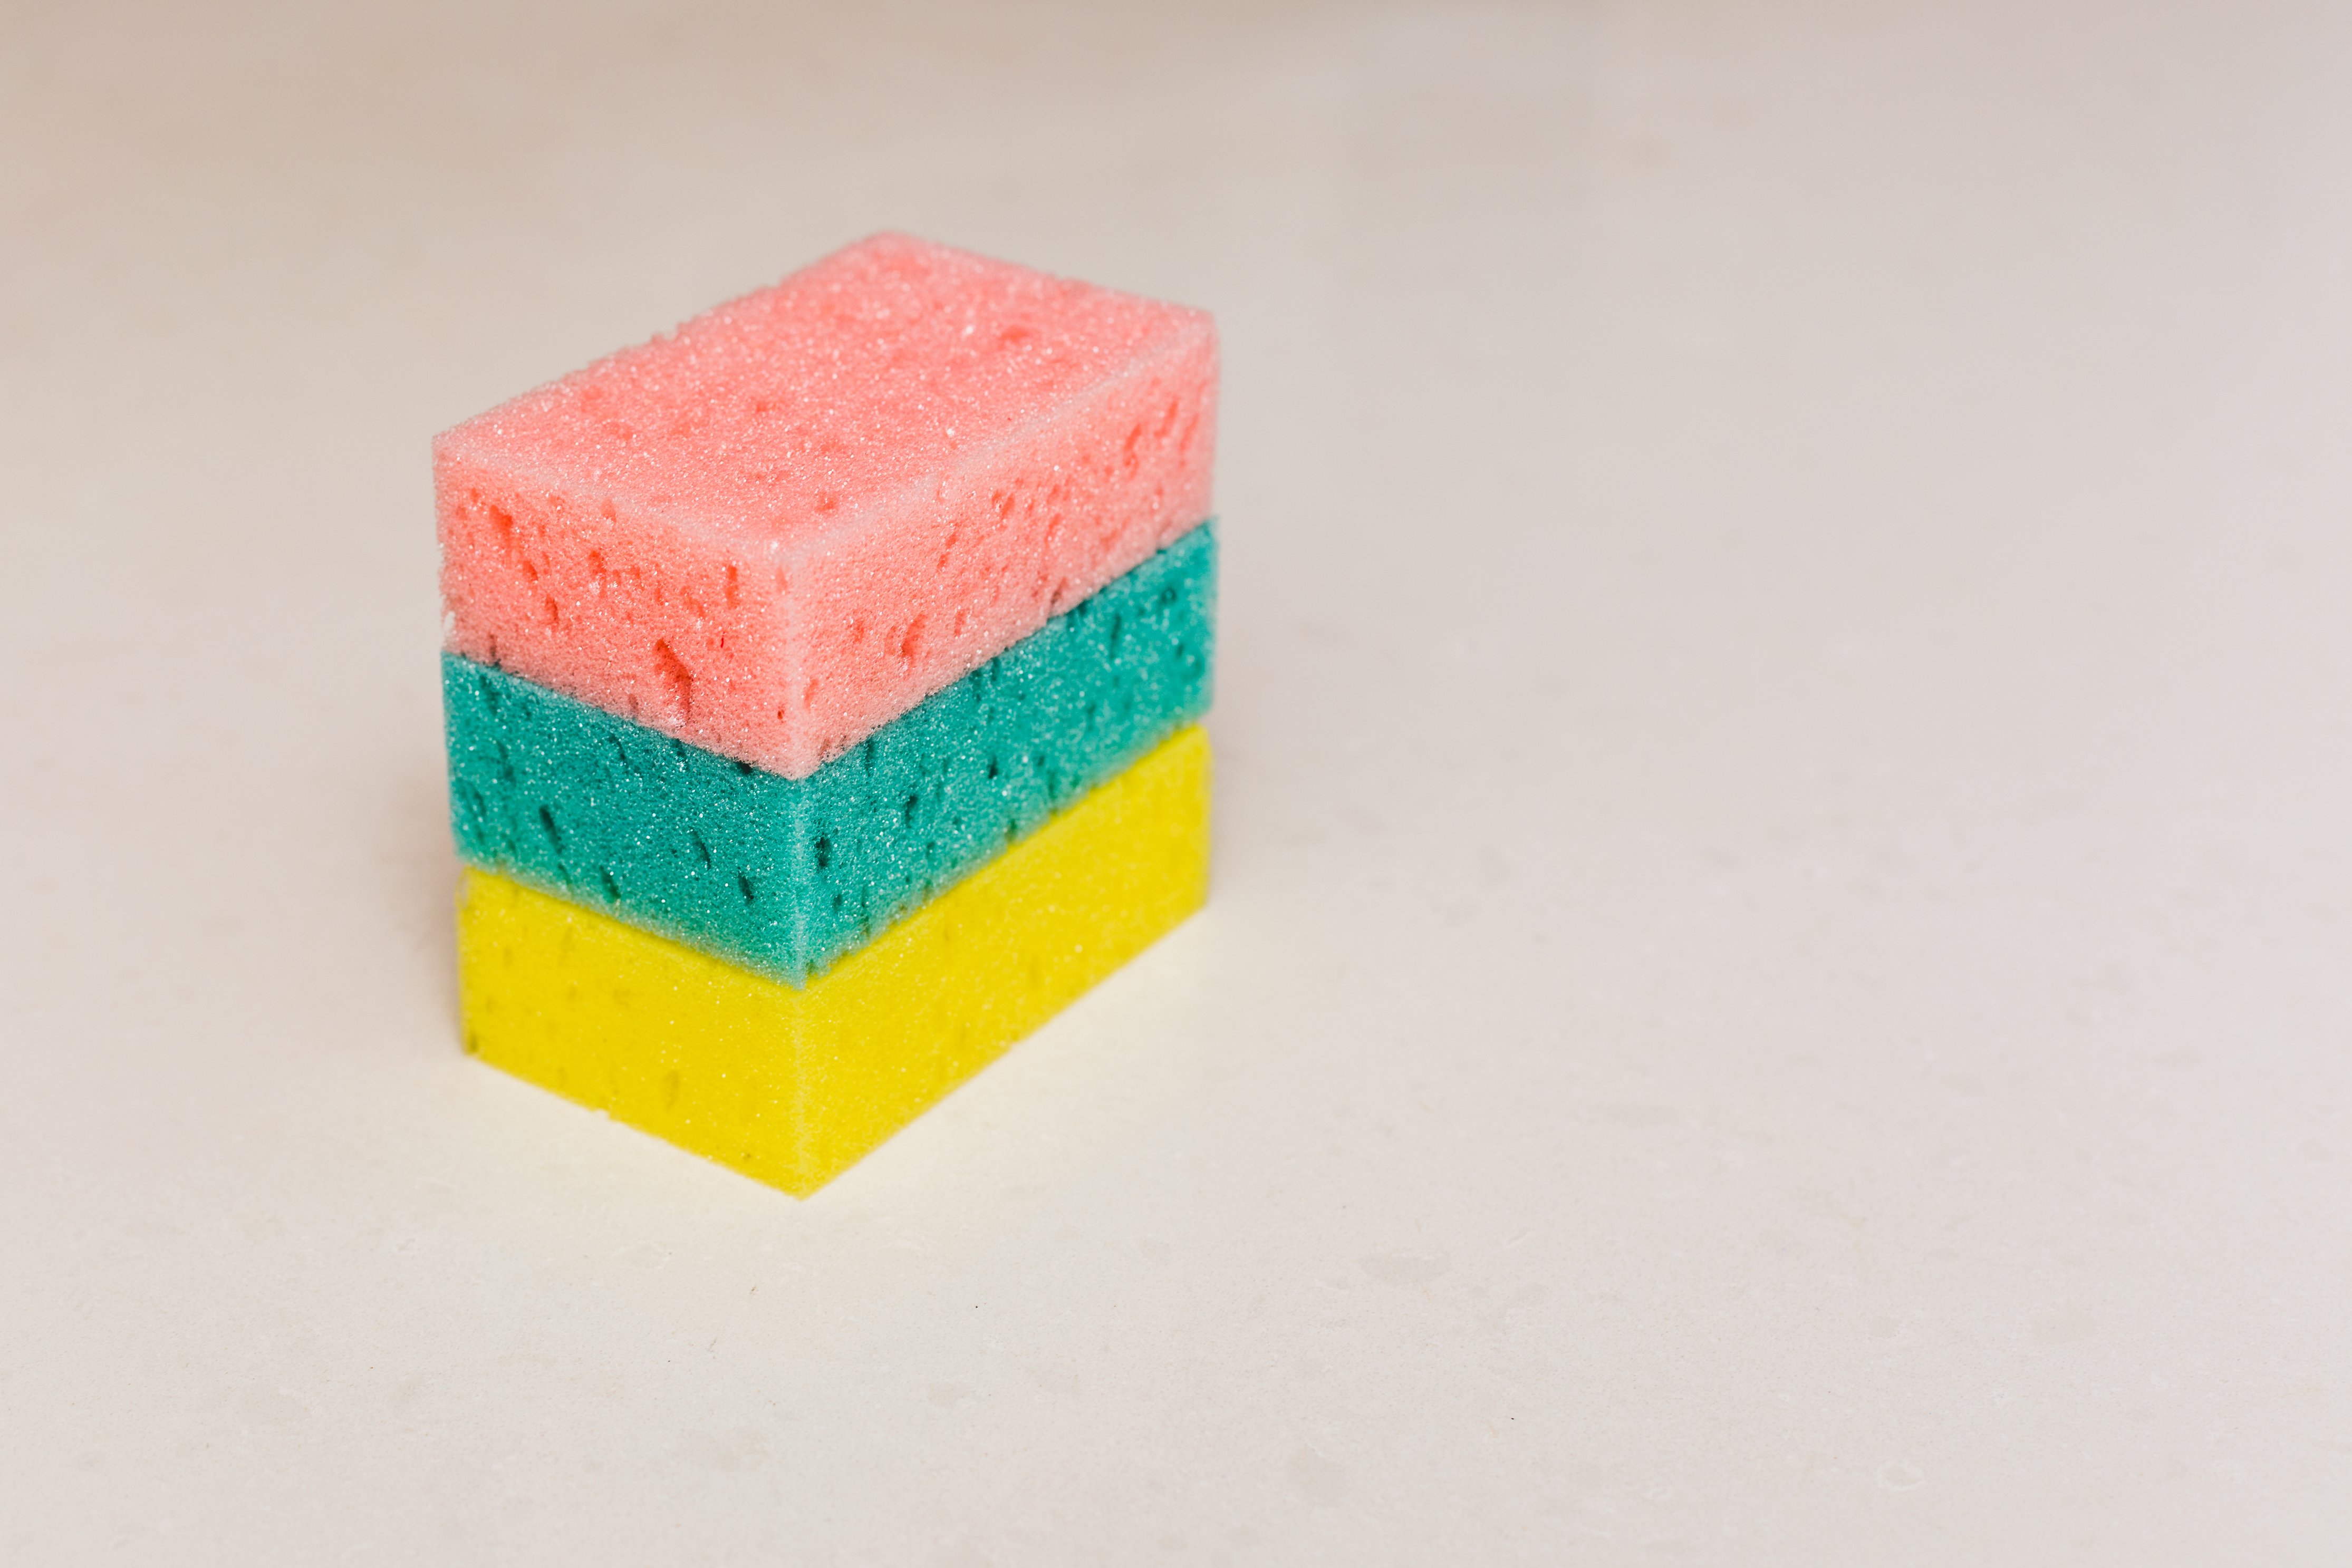 microwave your sponge